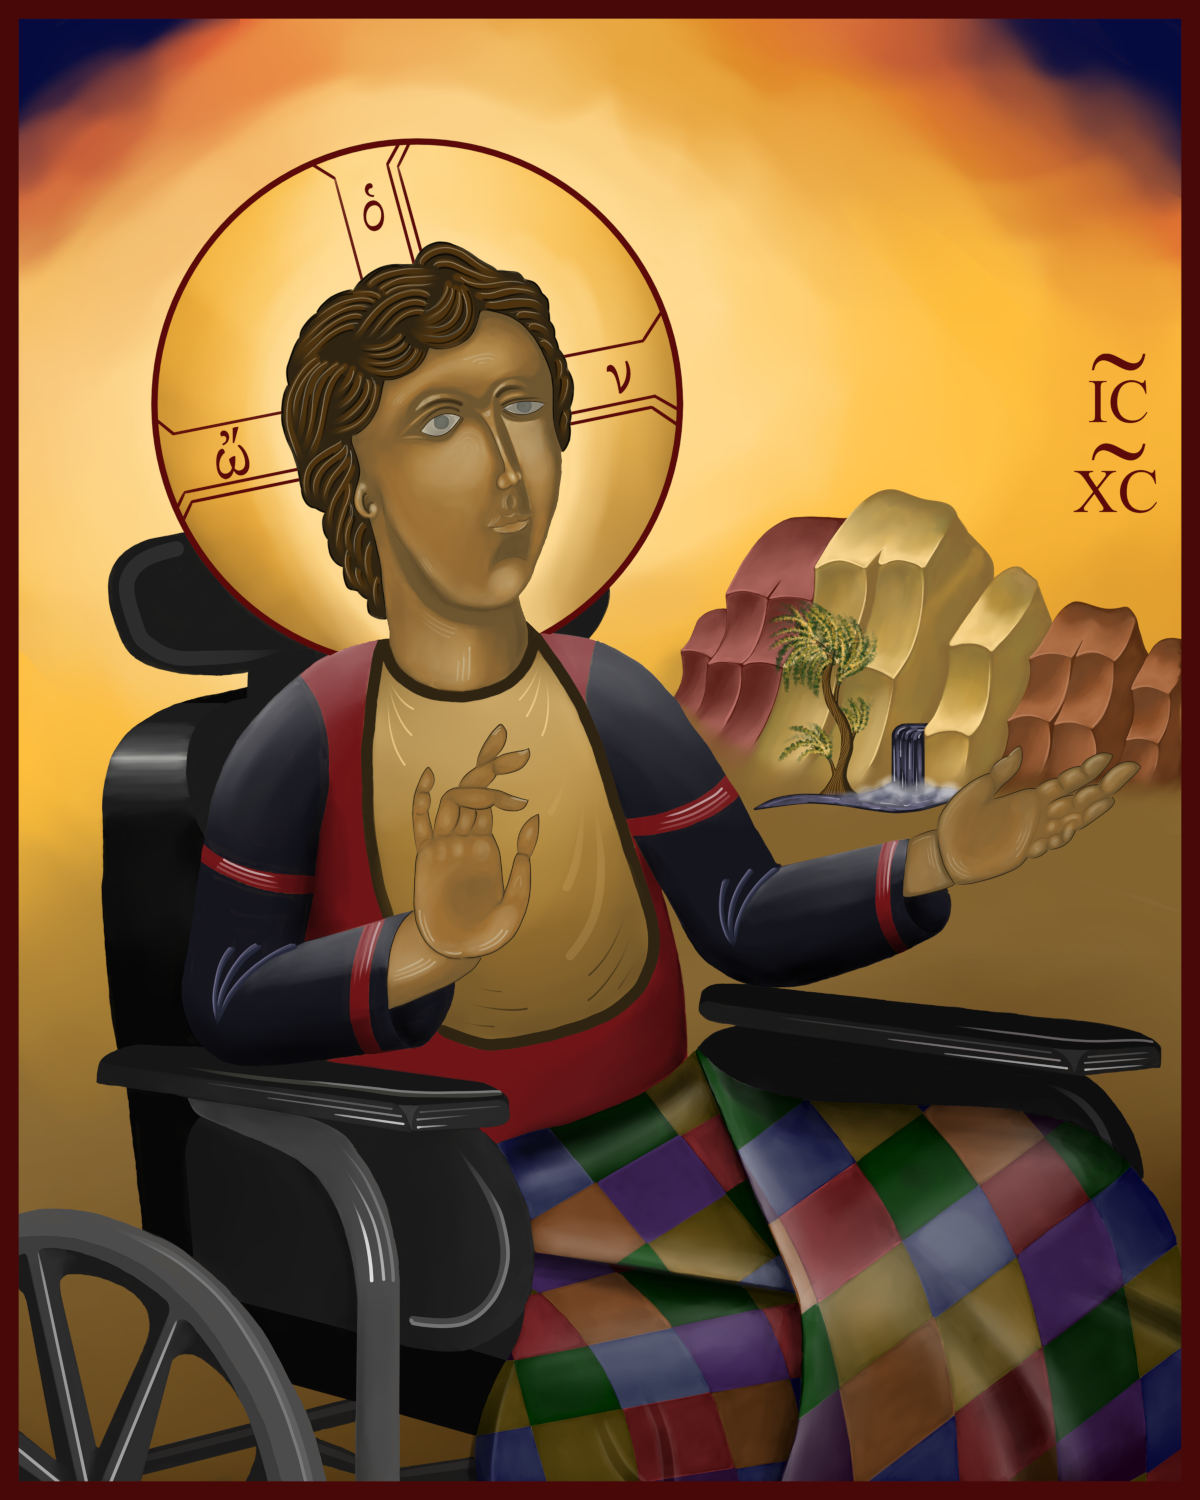 Christ in a wheelchair